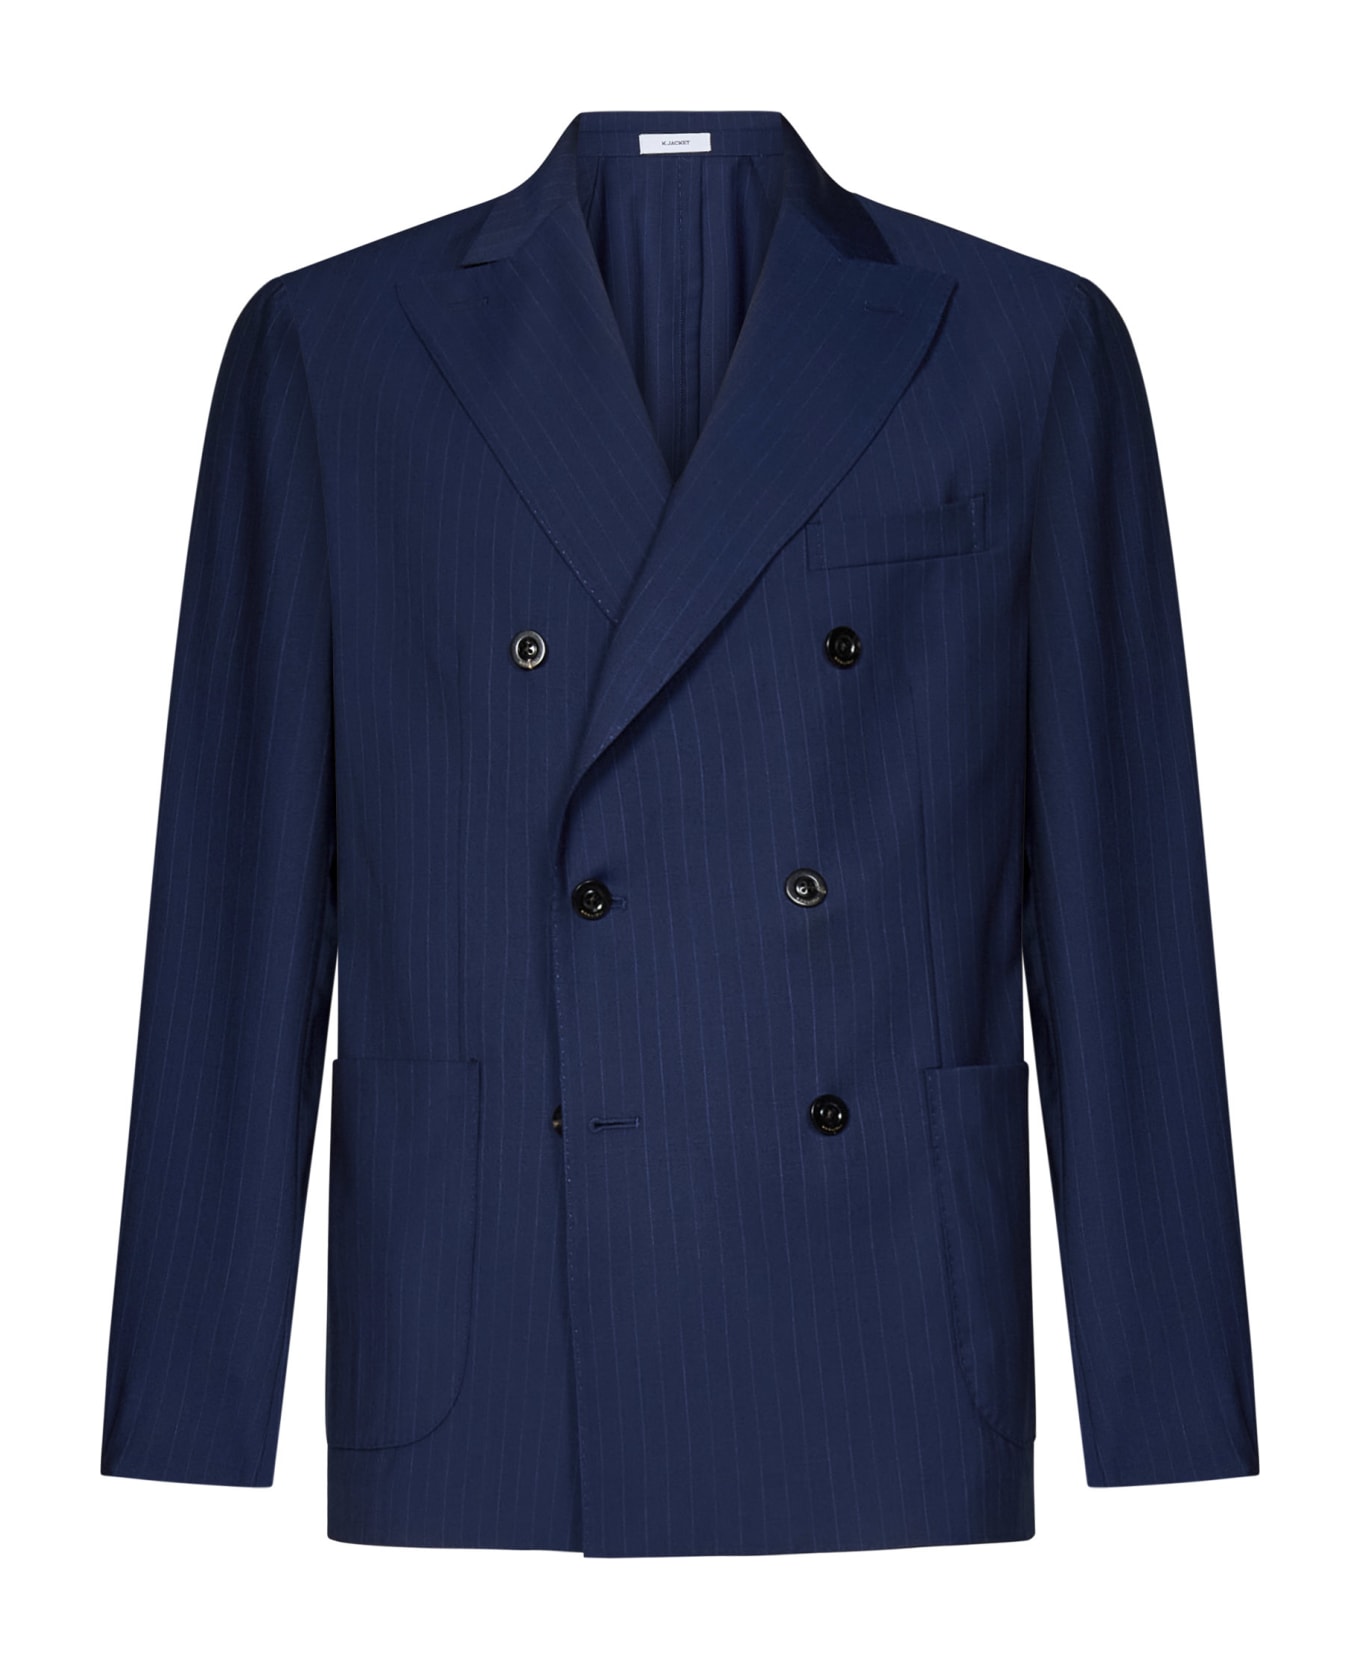 Boglioli K-jacket Suit - Blue